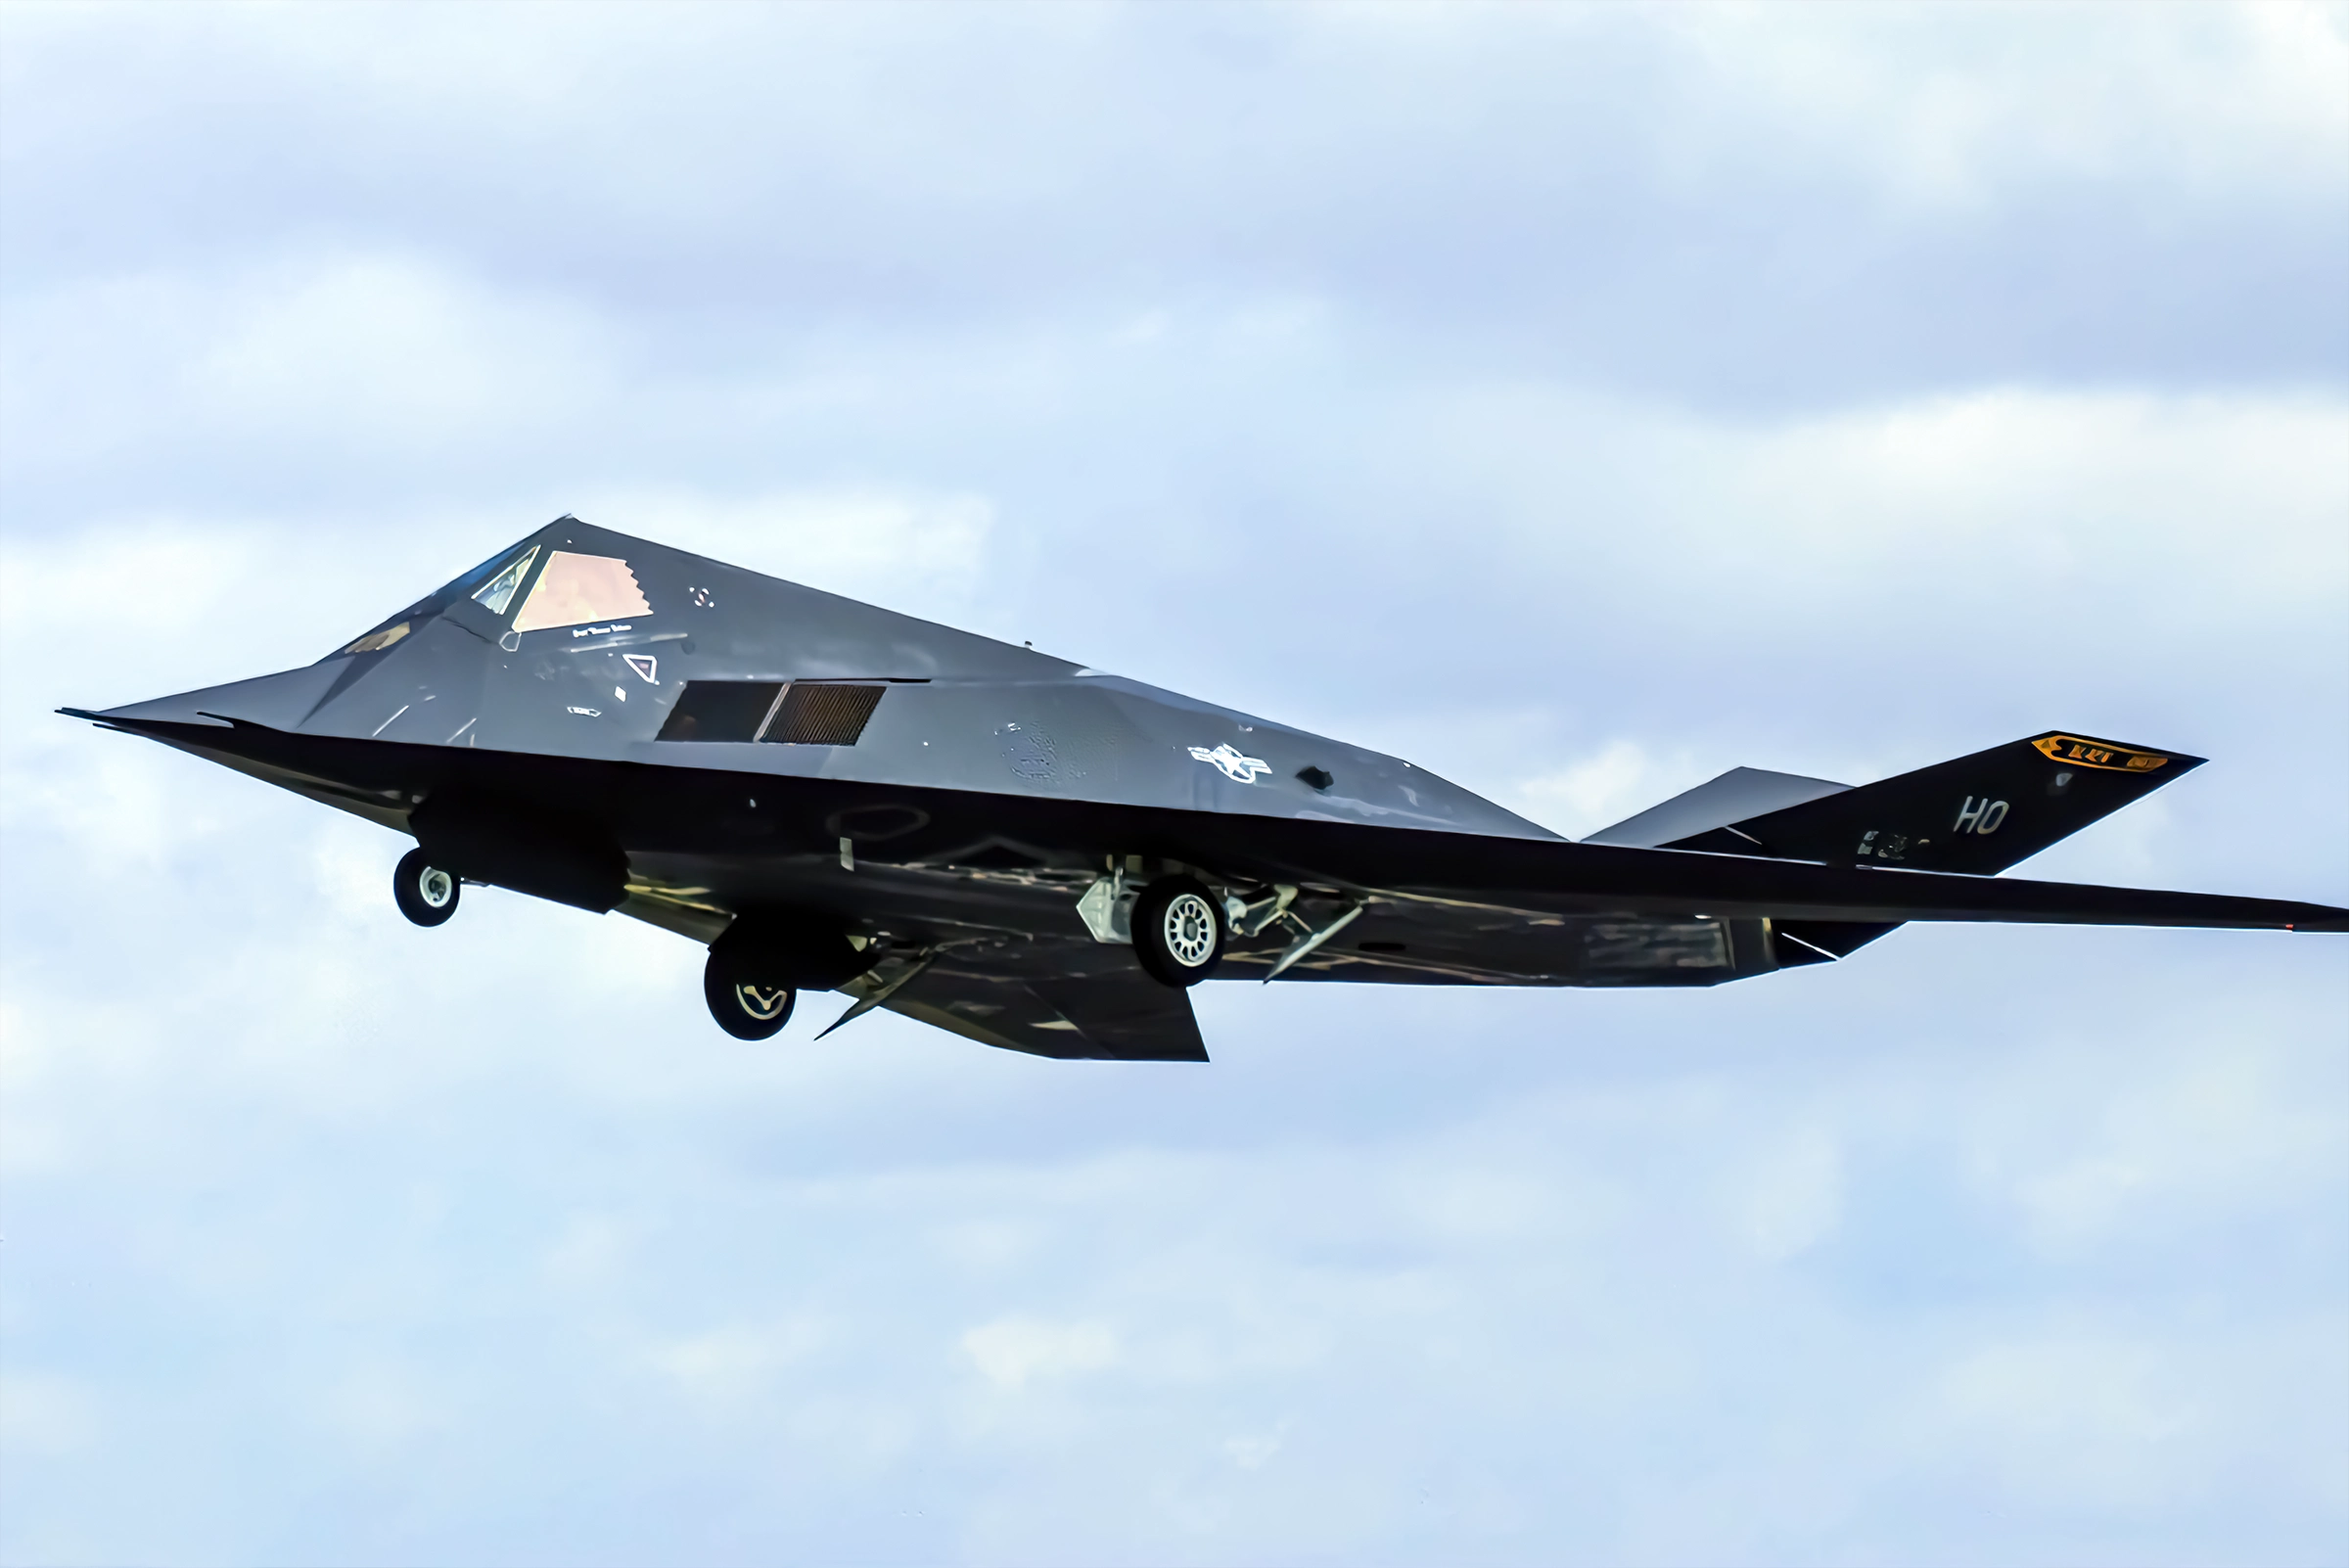 F-117 Nighthawk: The rules of secret warfare redefined